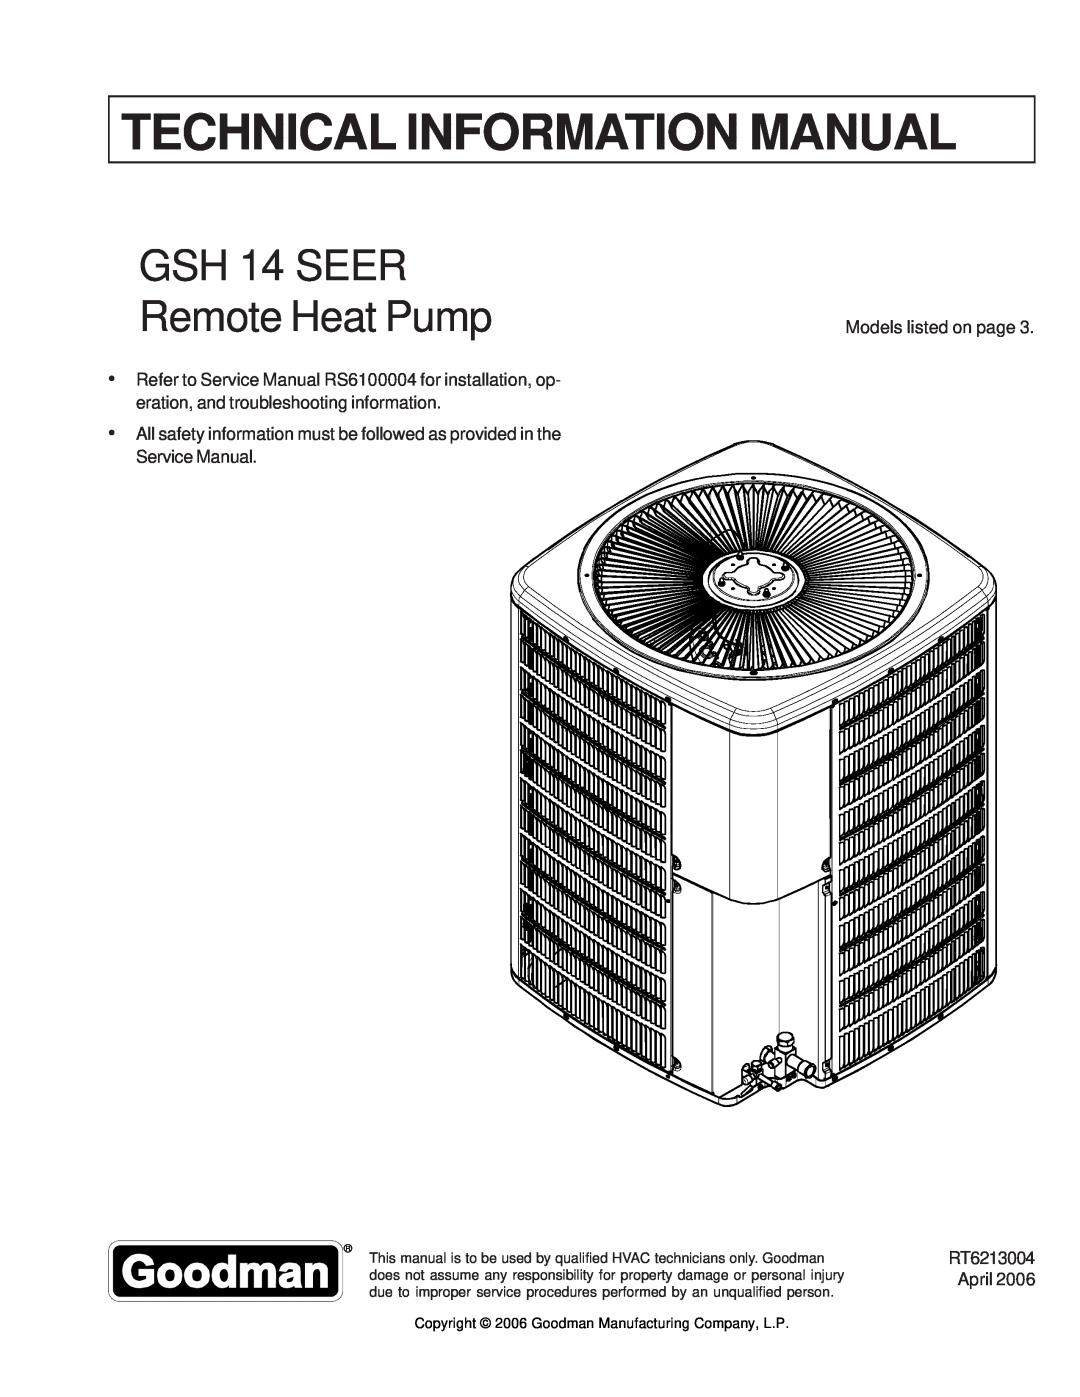 Goodman Mfg GSH140241A, GSH140301A, GSH140181A service manual Technical Information Manual, GSH 14 SEER, Remote Heat Pump 